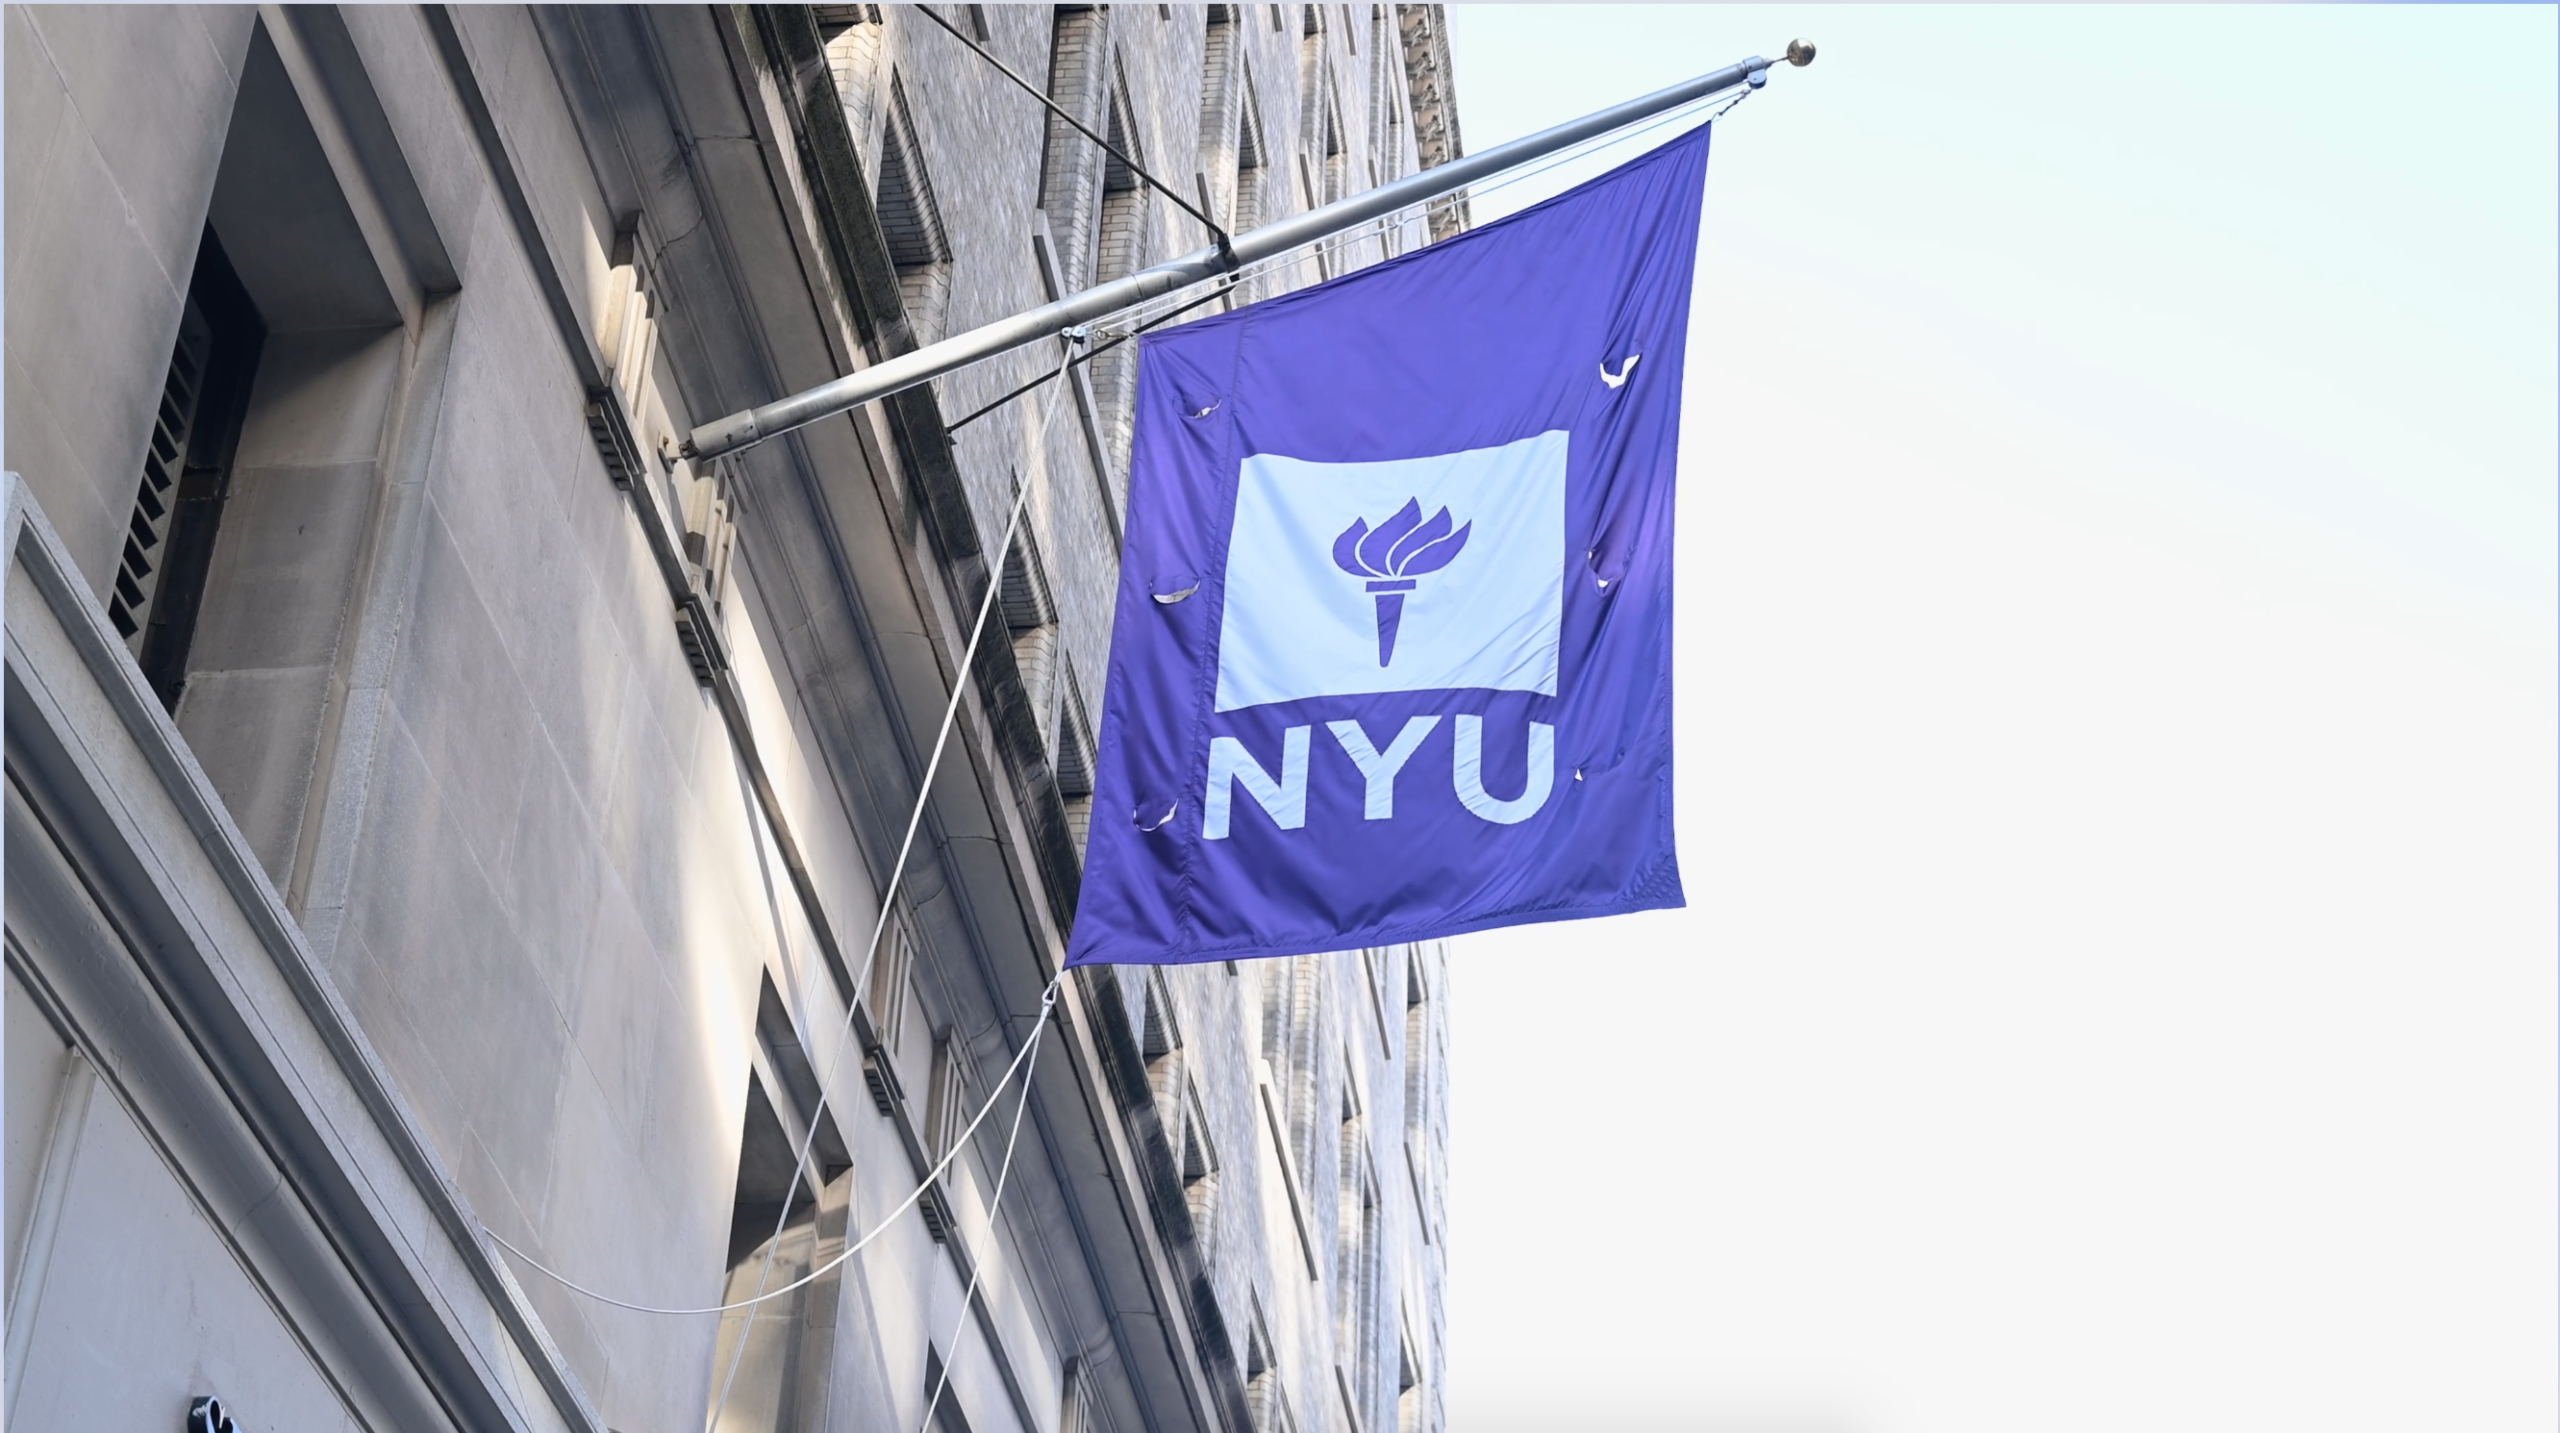 NYU Purple flag waves in the wind